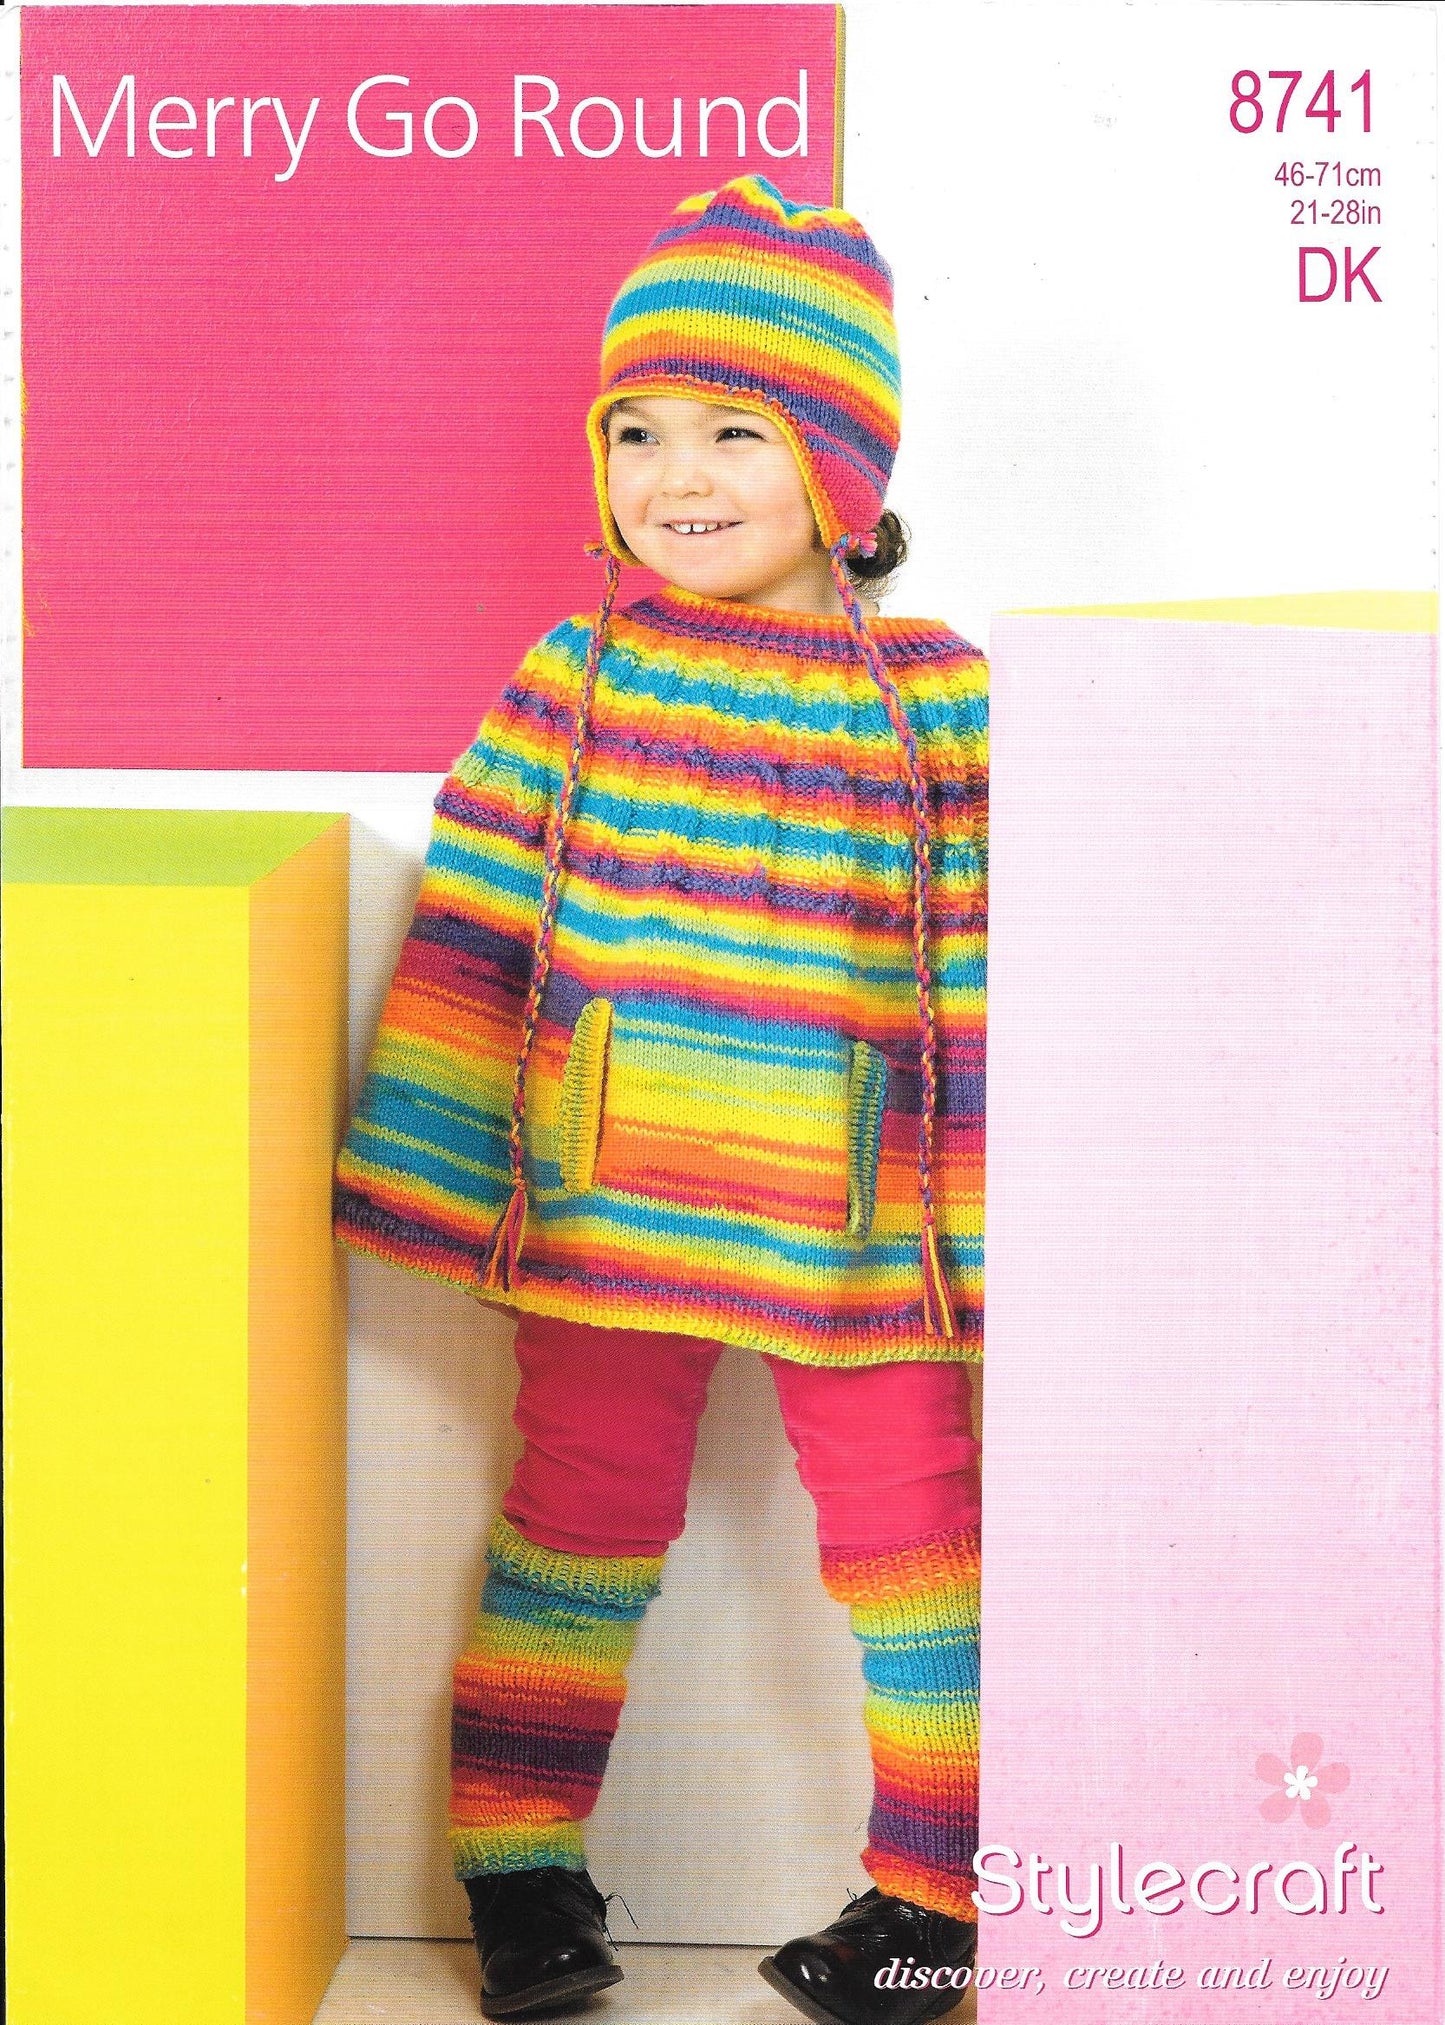 8741 Stylecraft Knitting Pattern. Cape, leg warmers, hat. DK. 18-28" chest